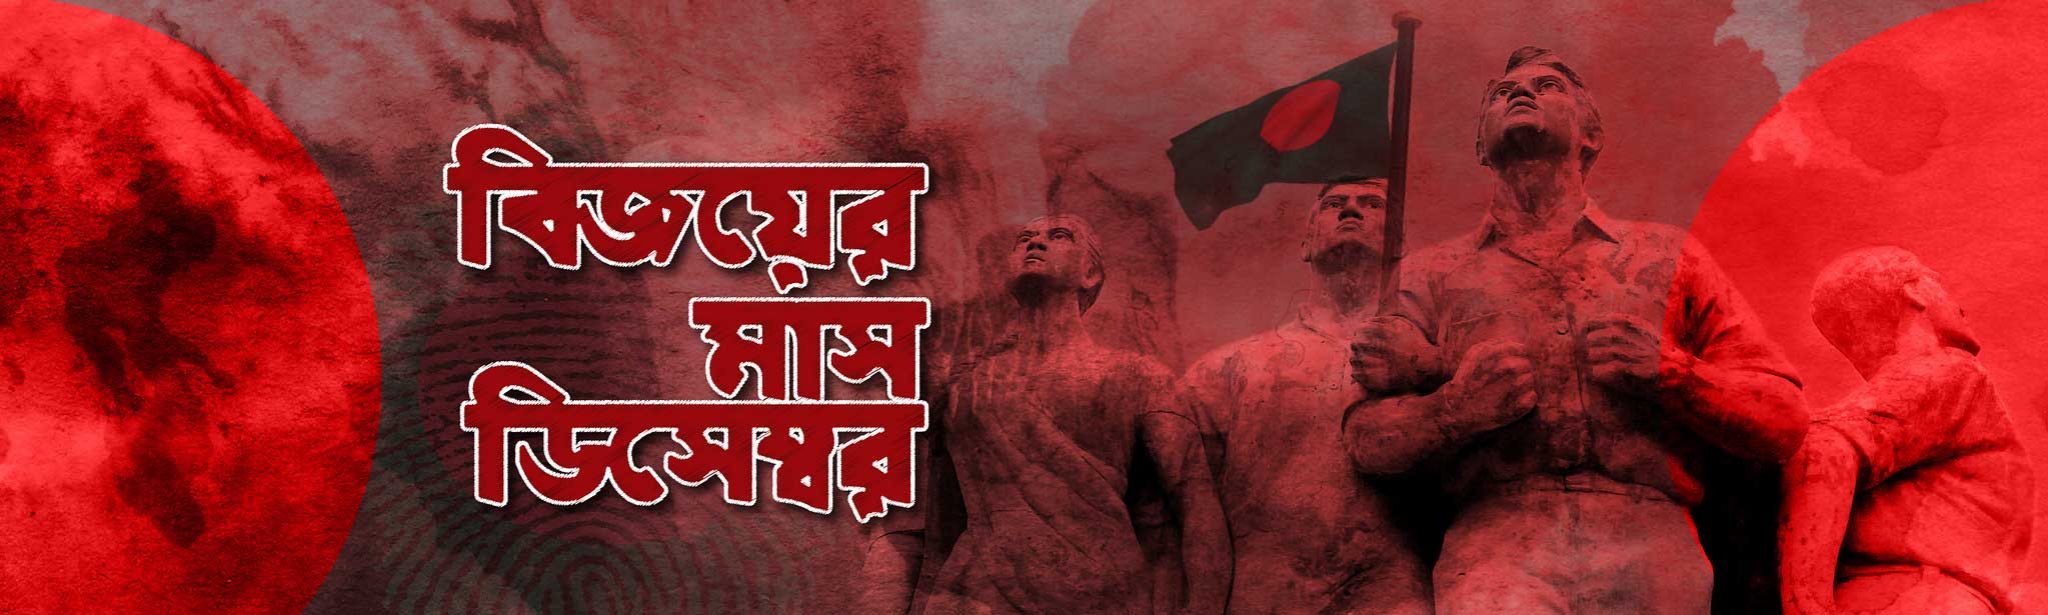 bangladesh victory day banner